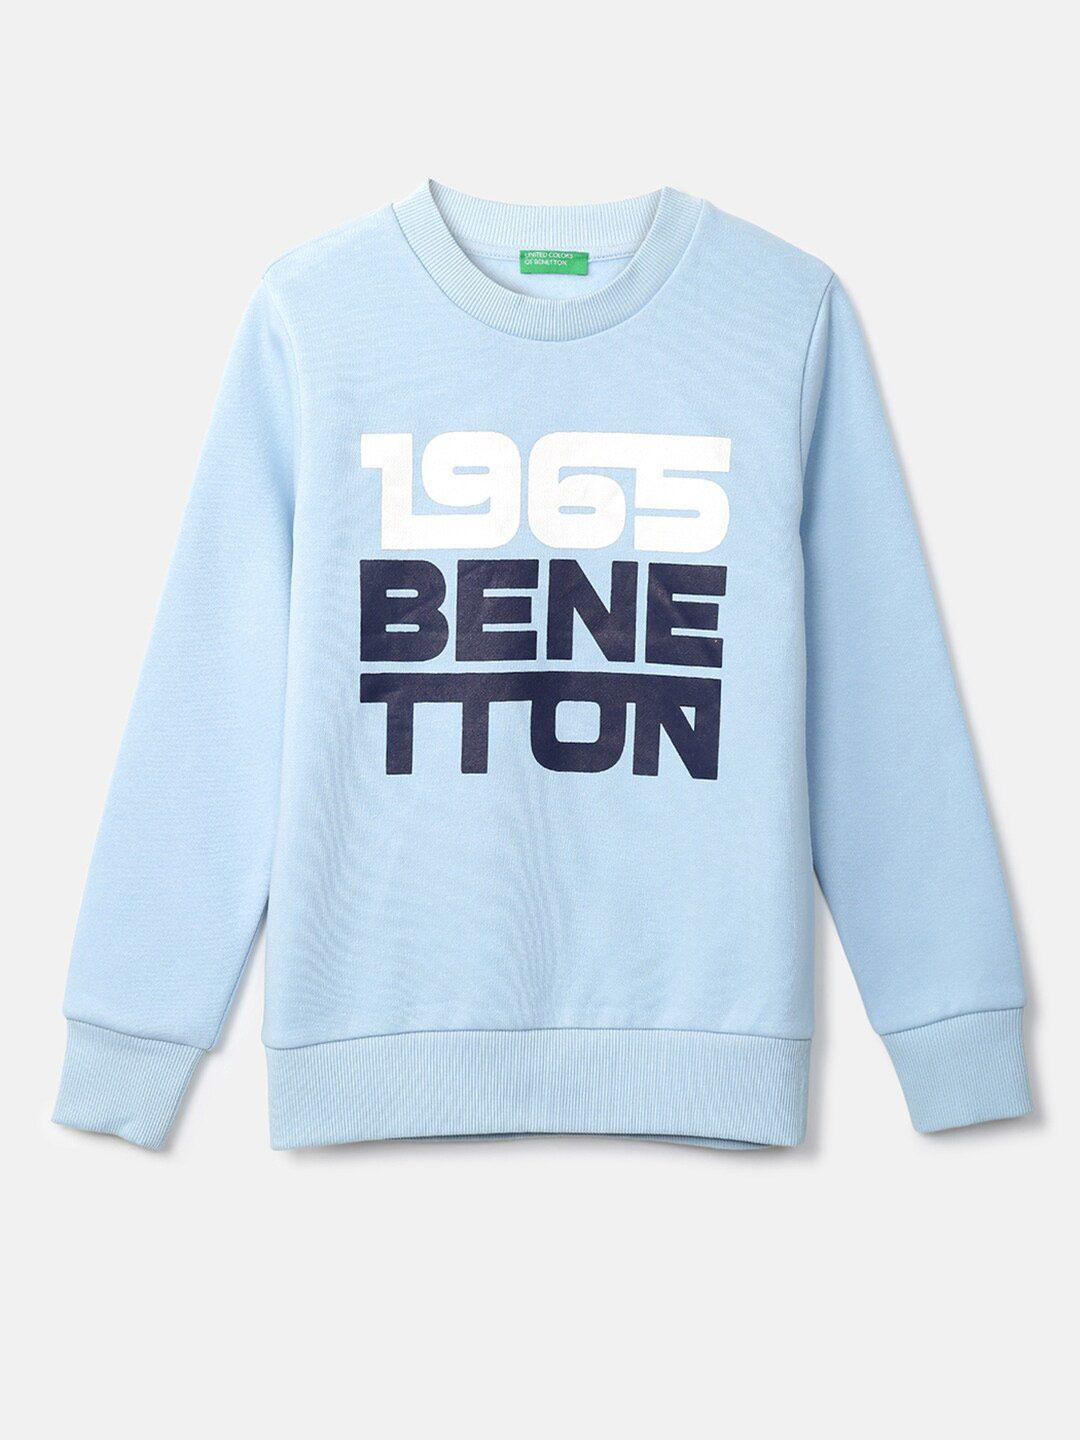 united colors of benetton boys blue printed sweatshirt